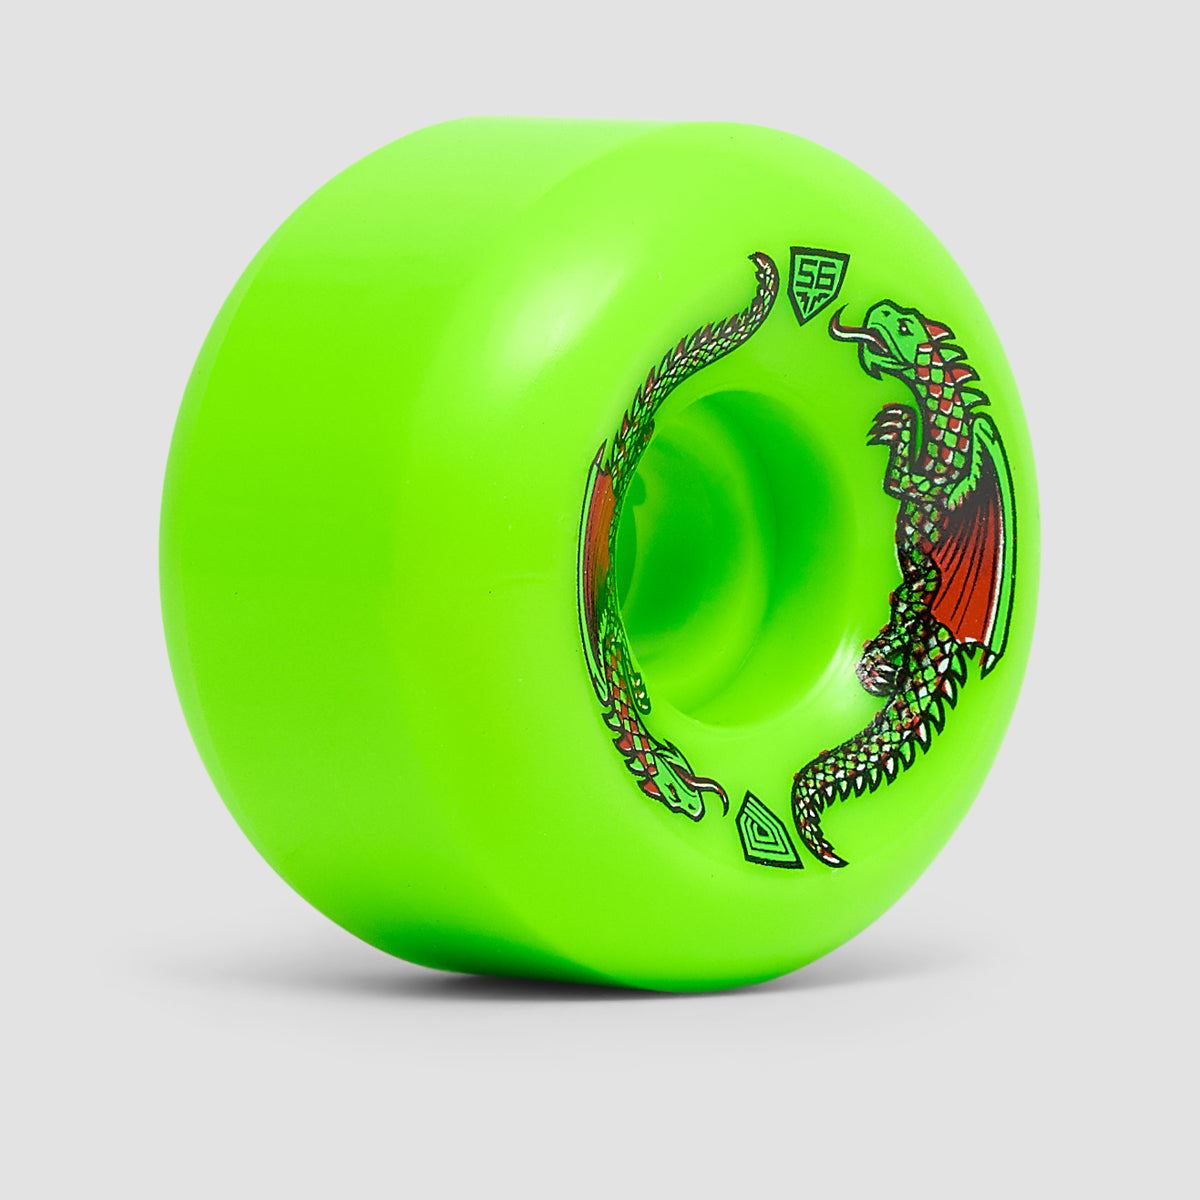 Powell Peralta Dragon Formula 93A Skateboard Wheels Green 56x36mm